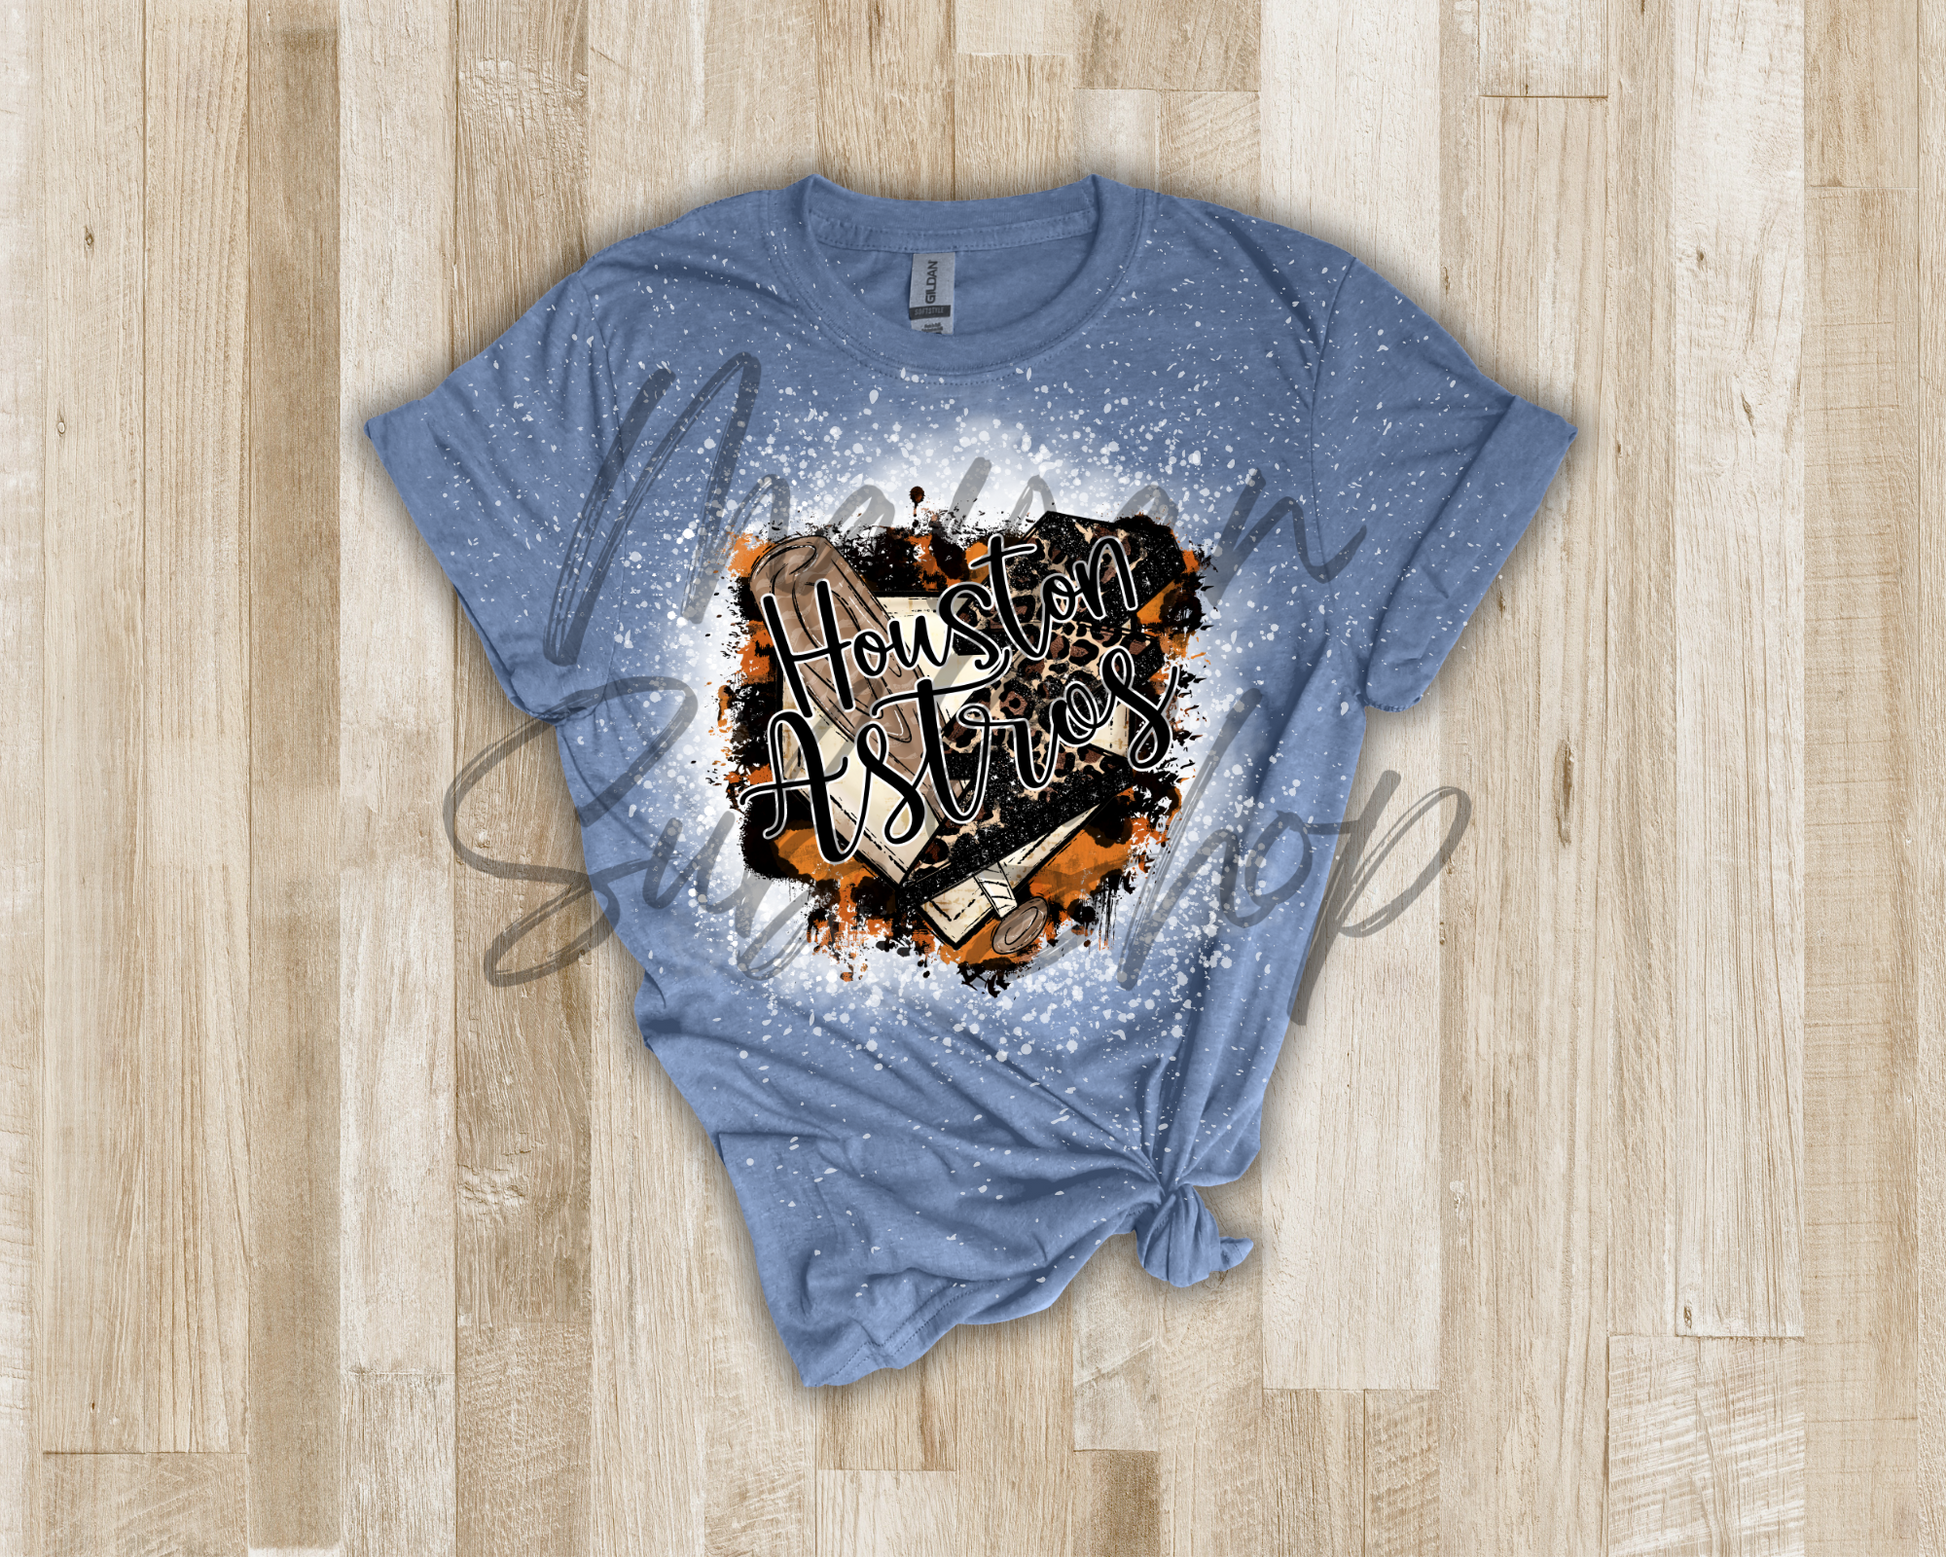 Astros home plate bleached shirt - Mayan Sub Shop